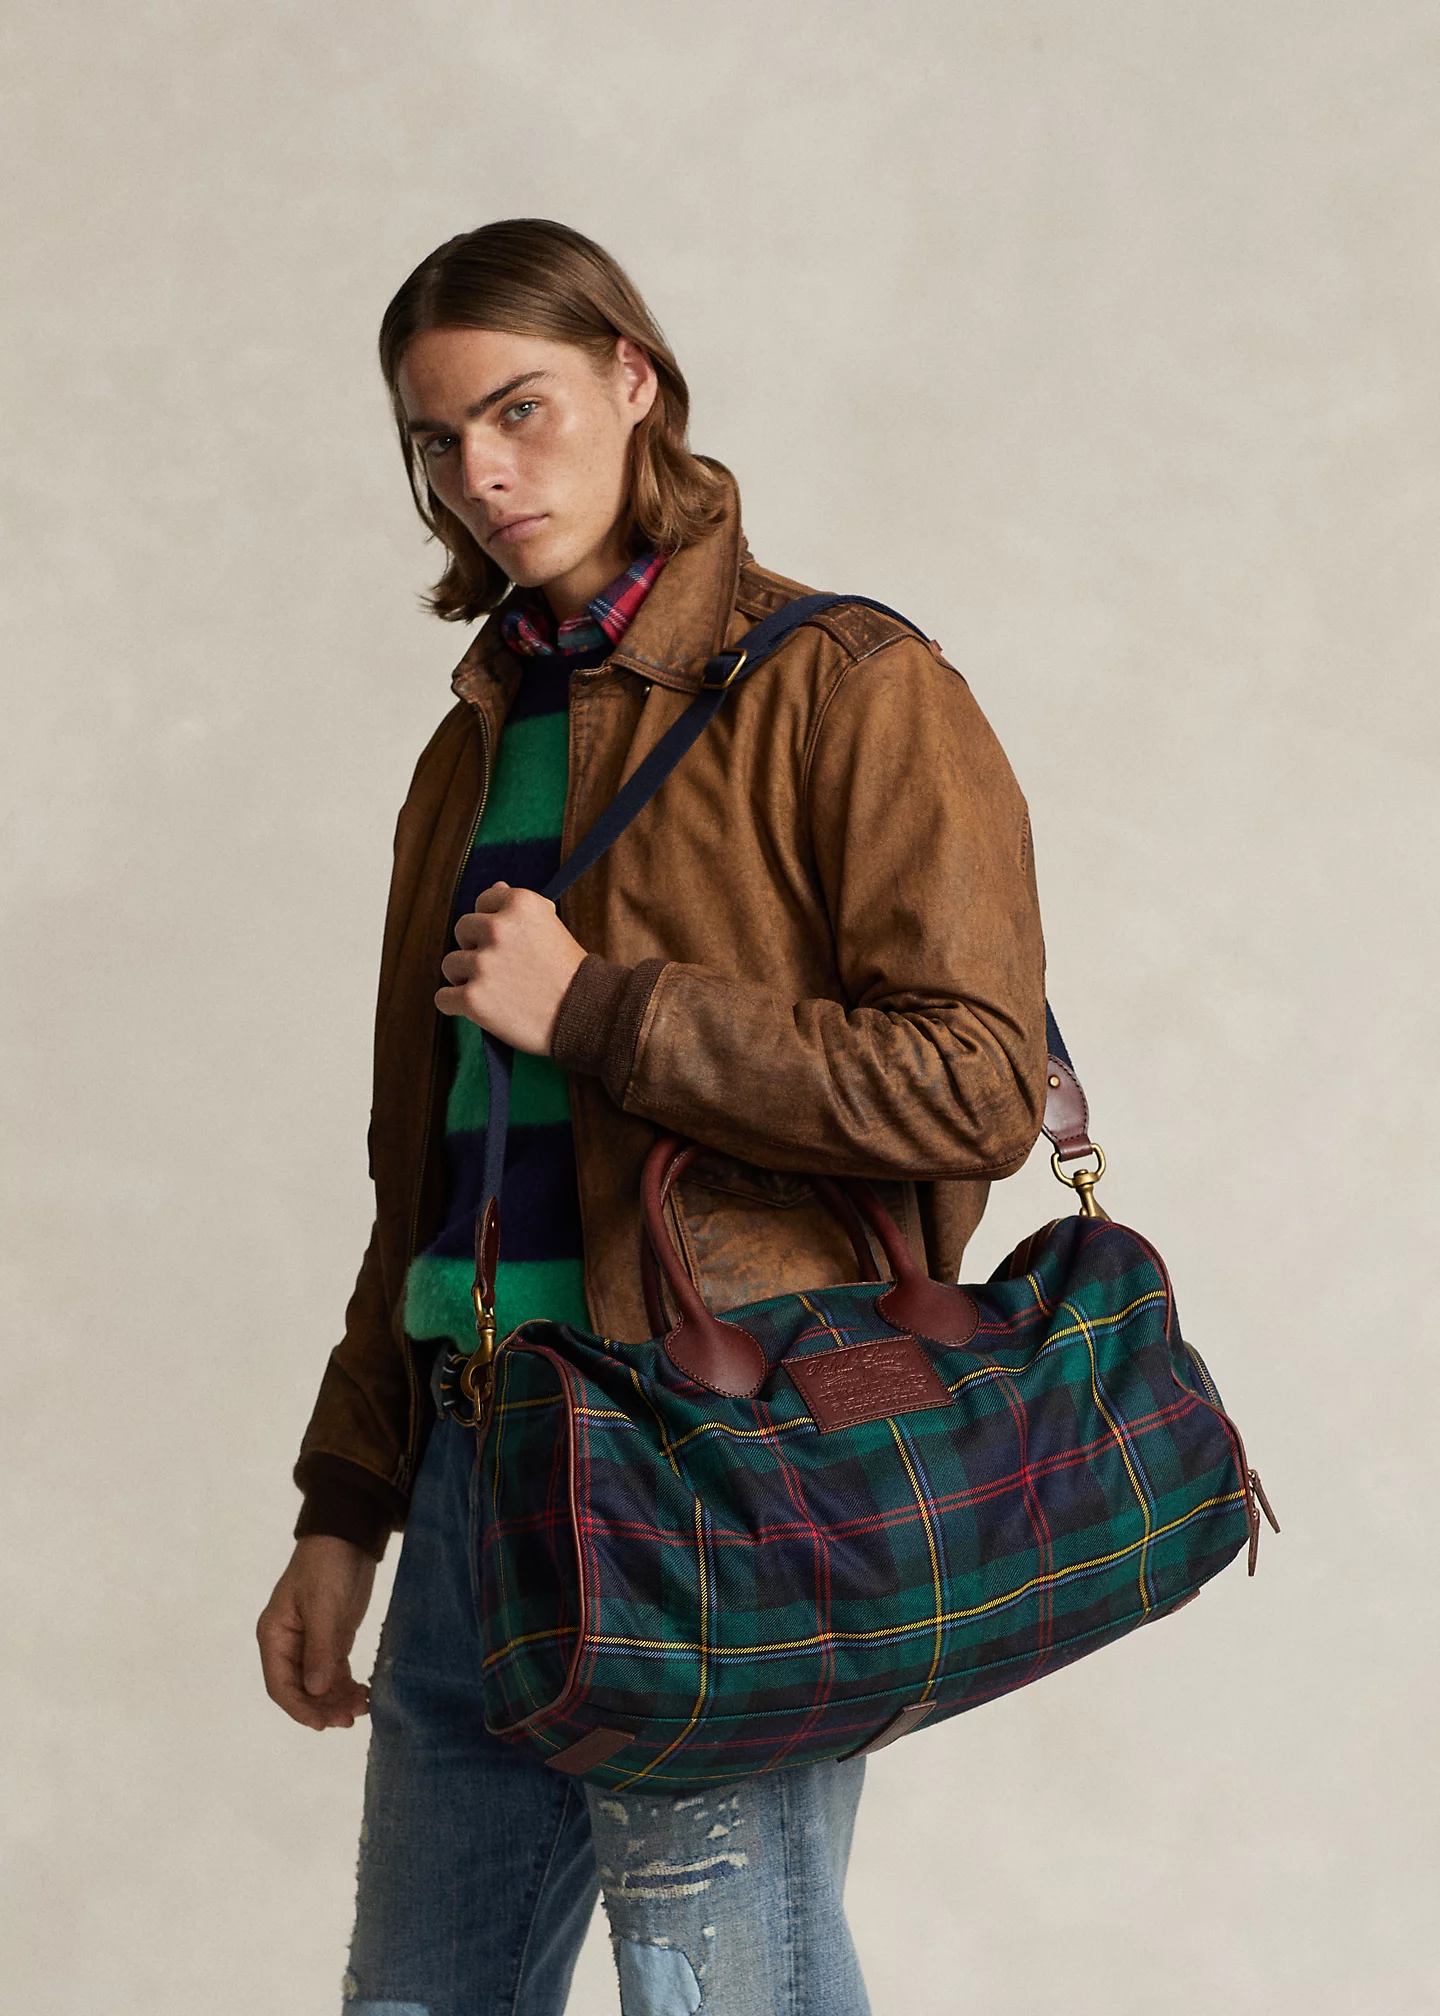 stylish handbagsHeritage Plaid Wool & Leather Duffel-,$68.69-4